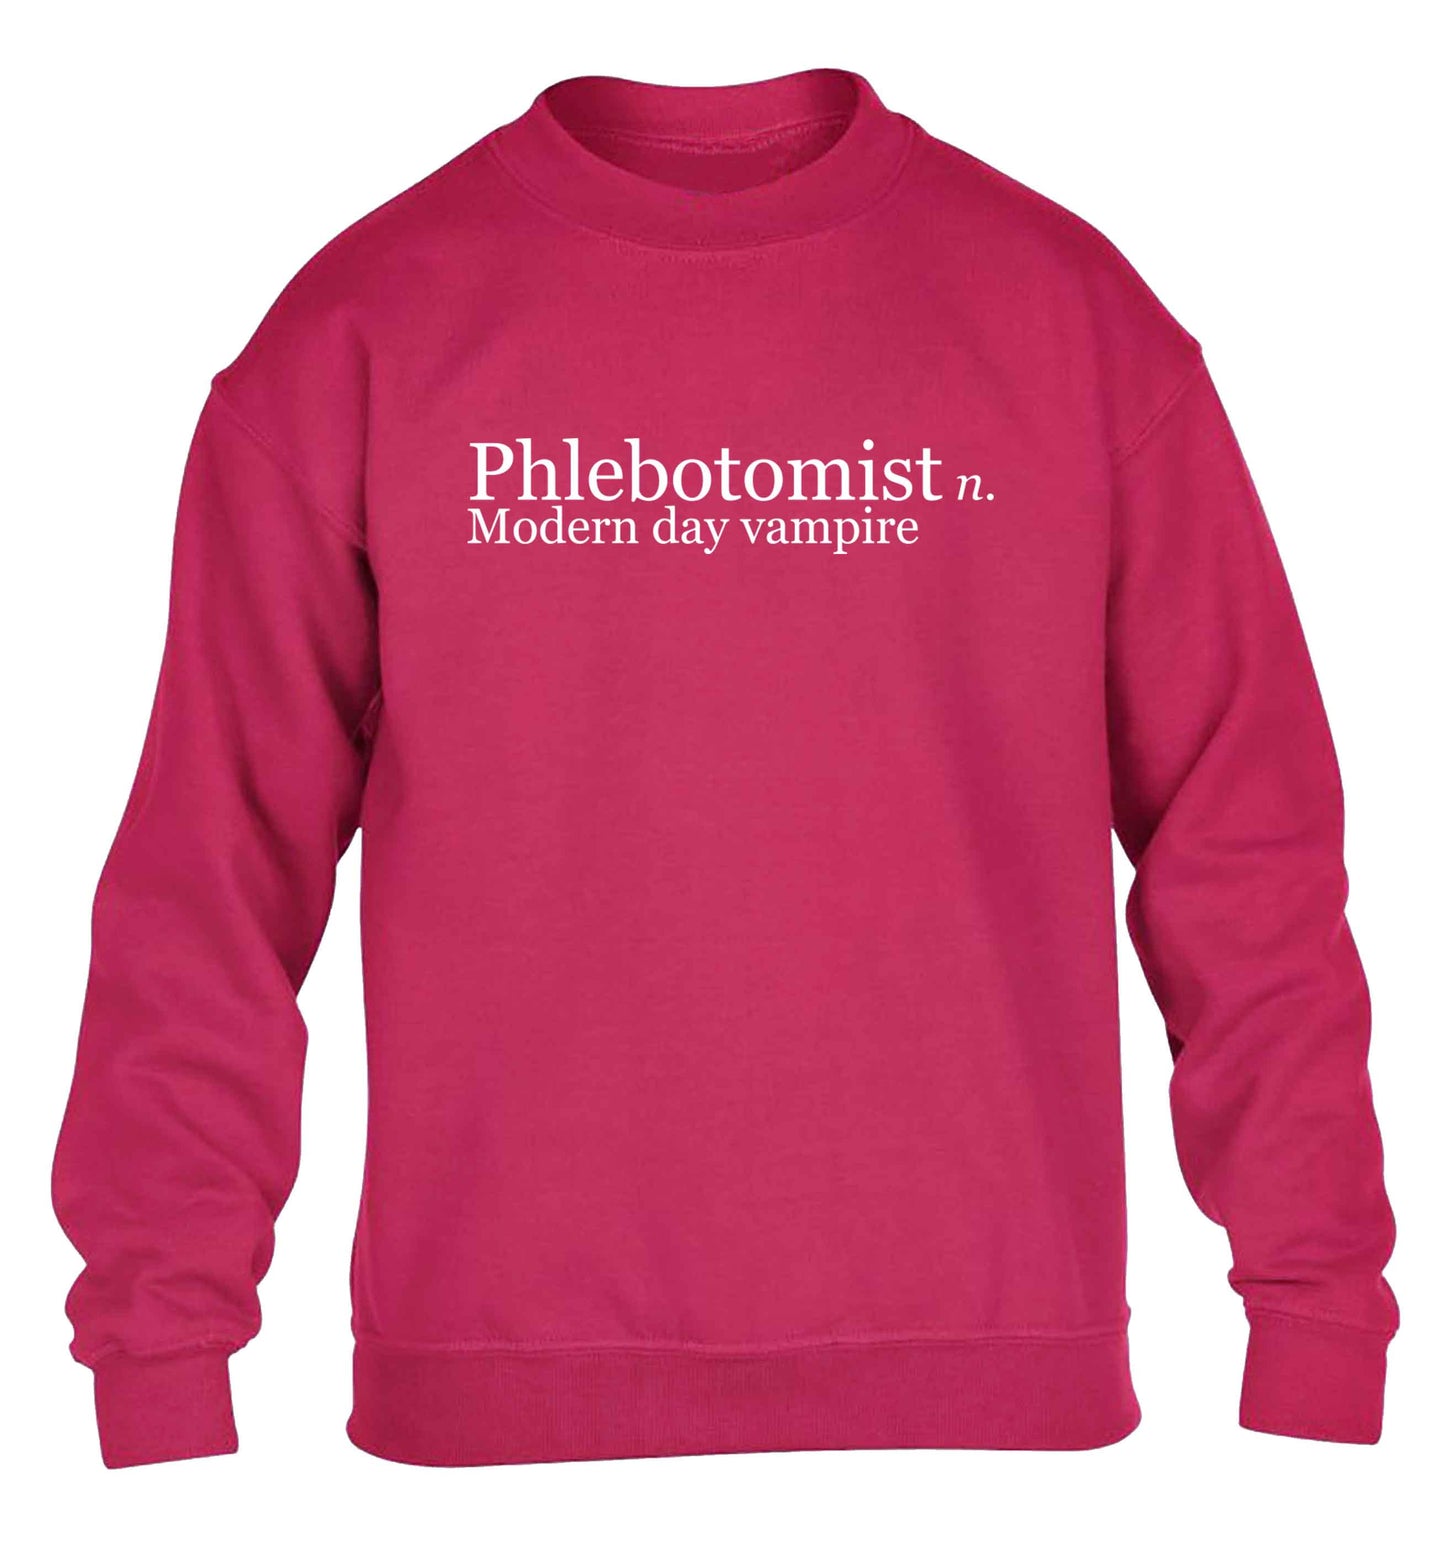 Phlebotomist - Modern day vampire children's pink sweater 12-13 Years